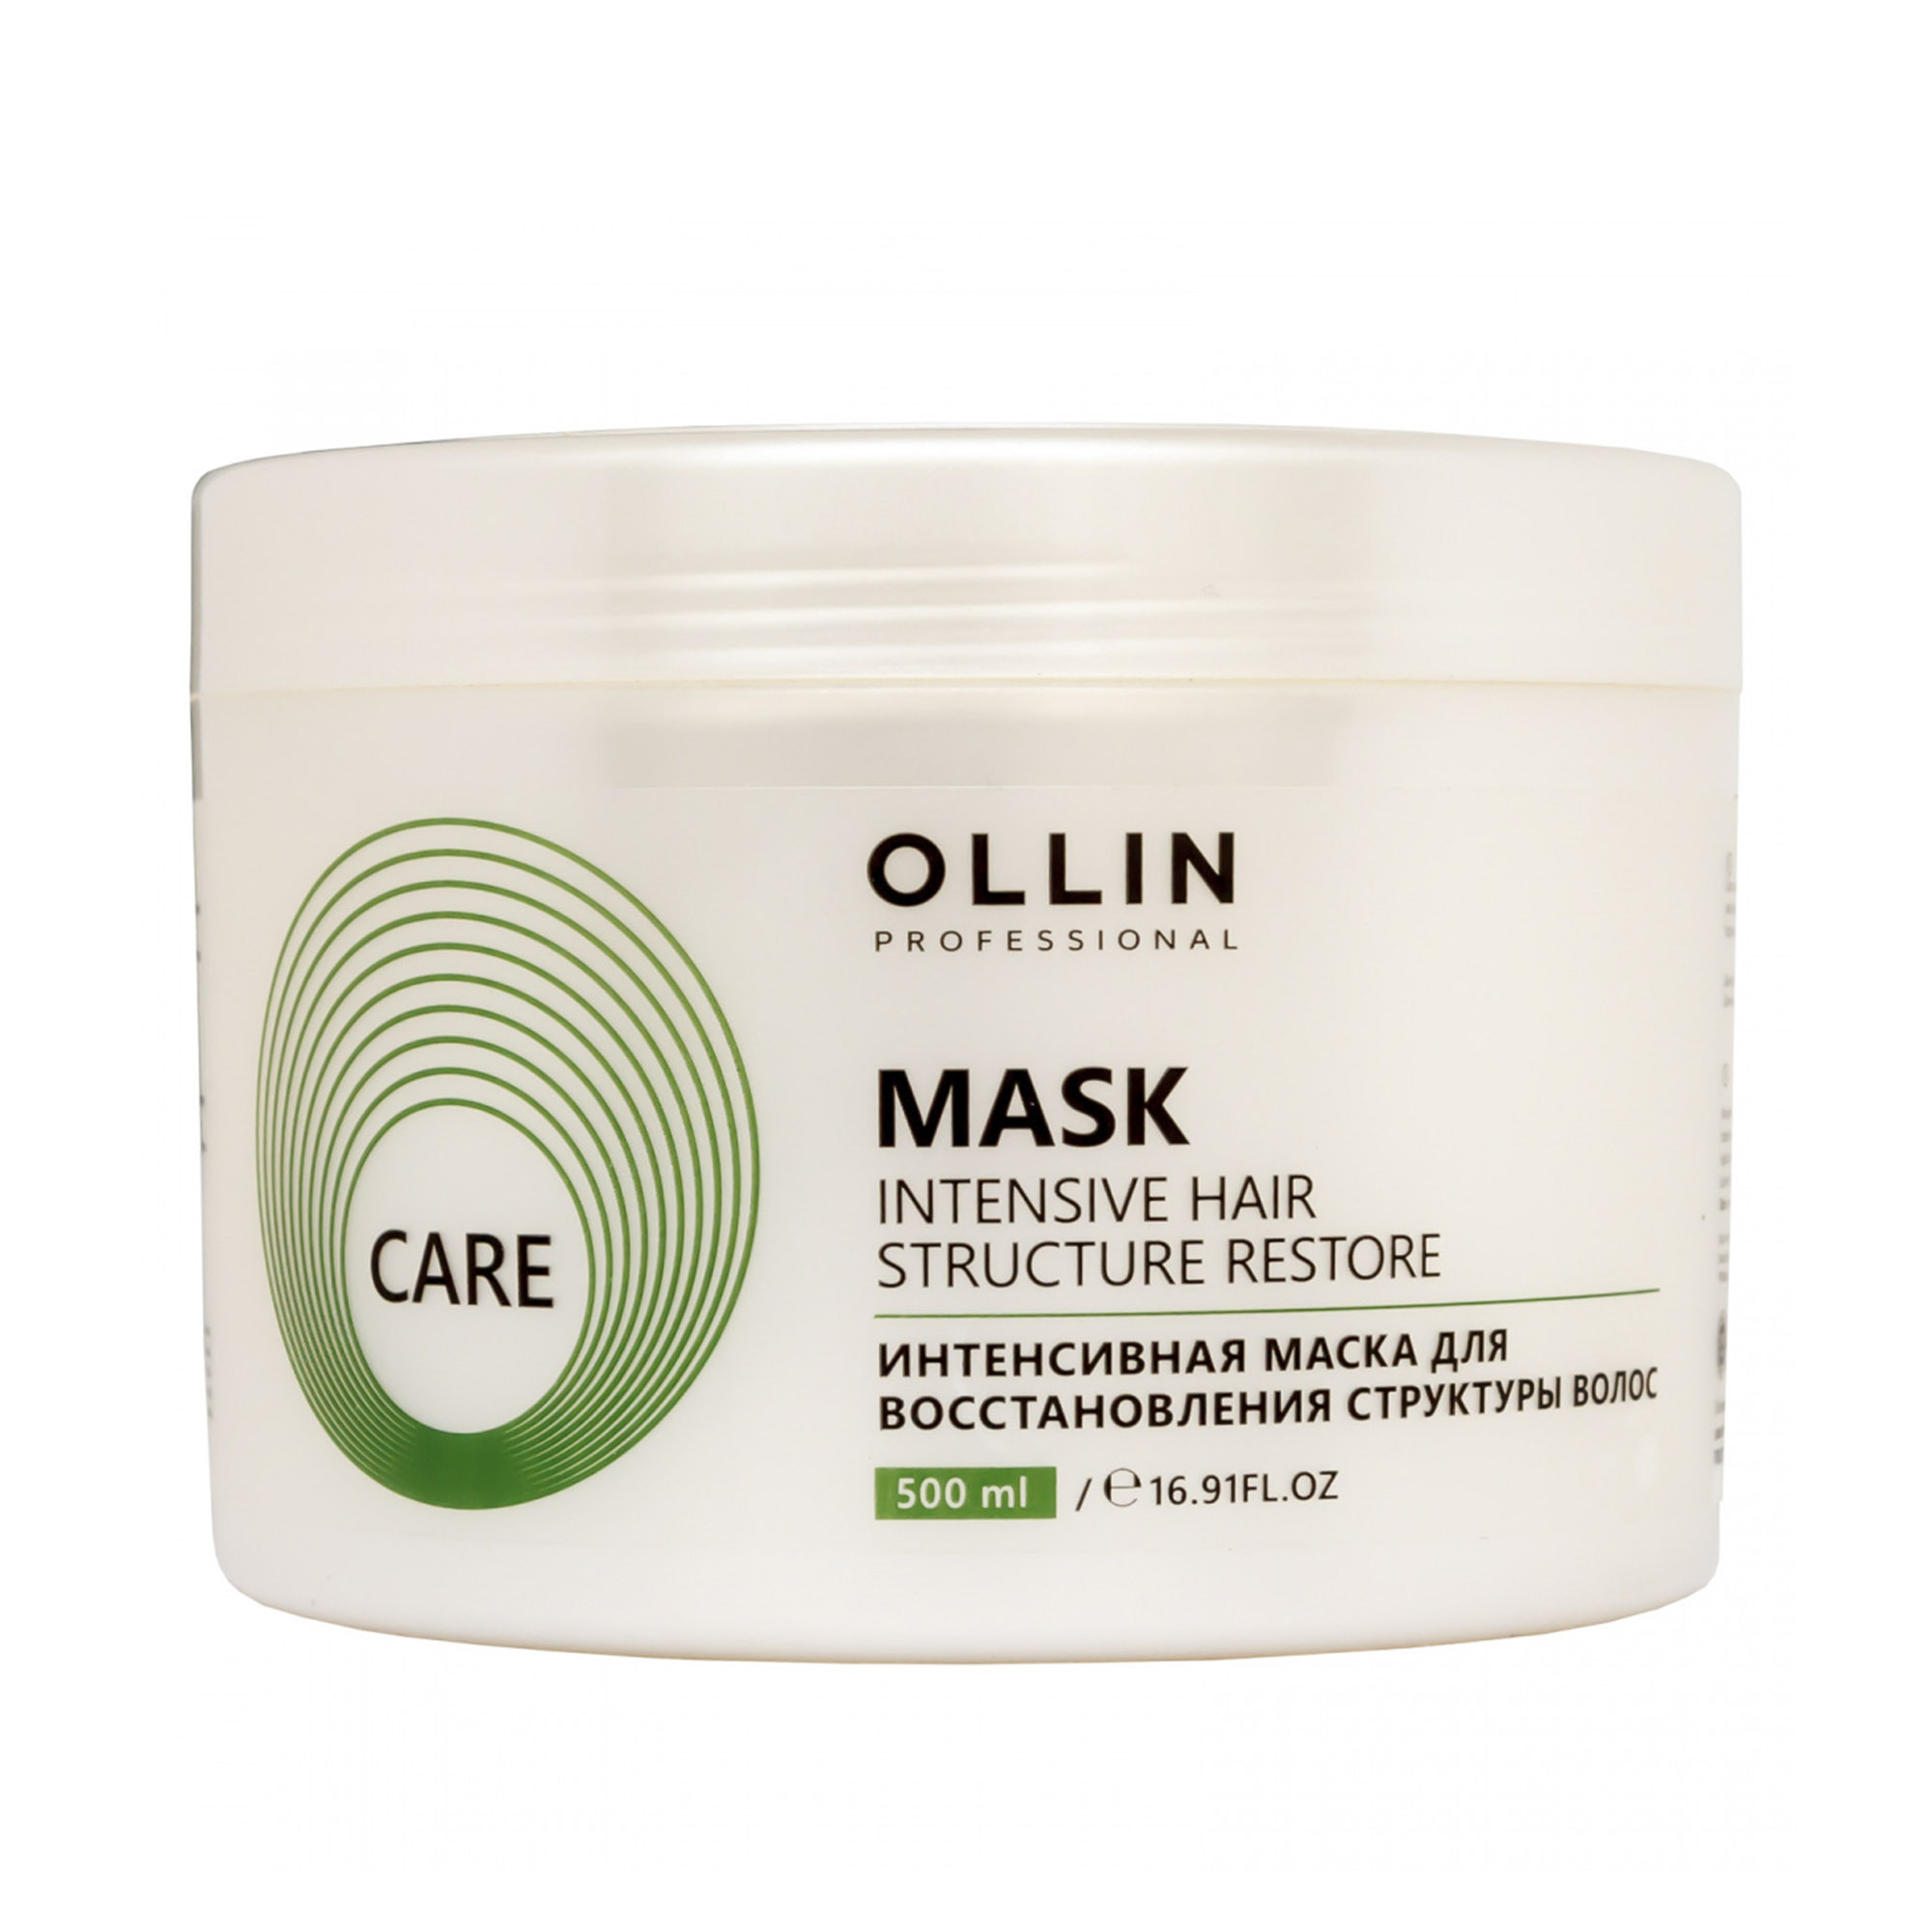 Redist professional argan hair care mask аргановая маска для волос 500 ml